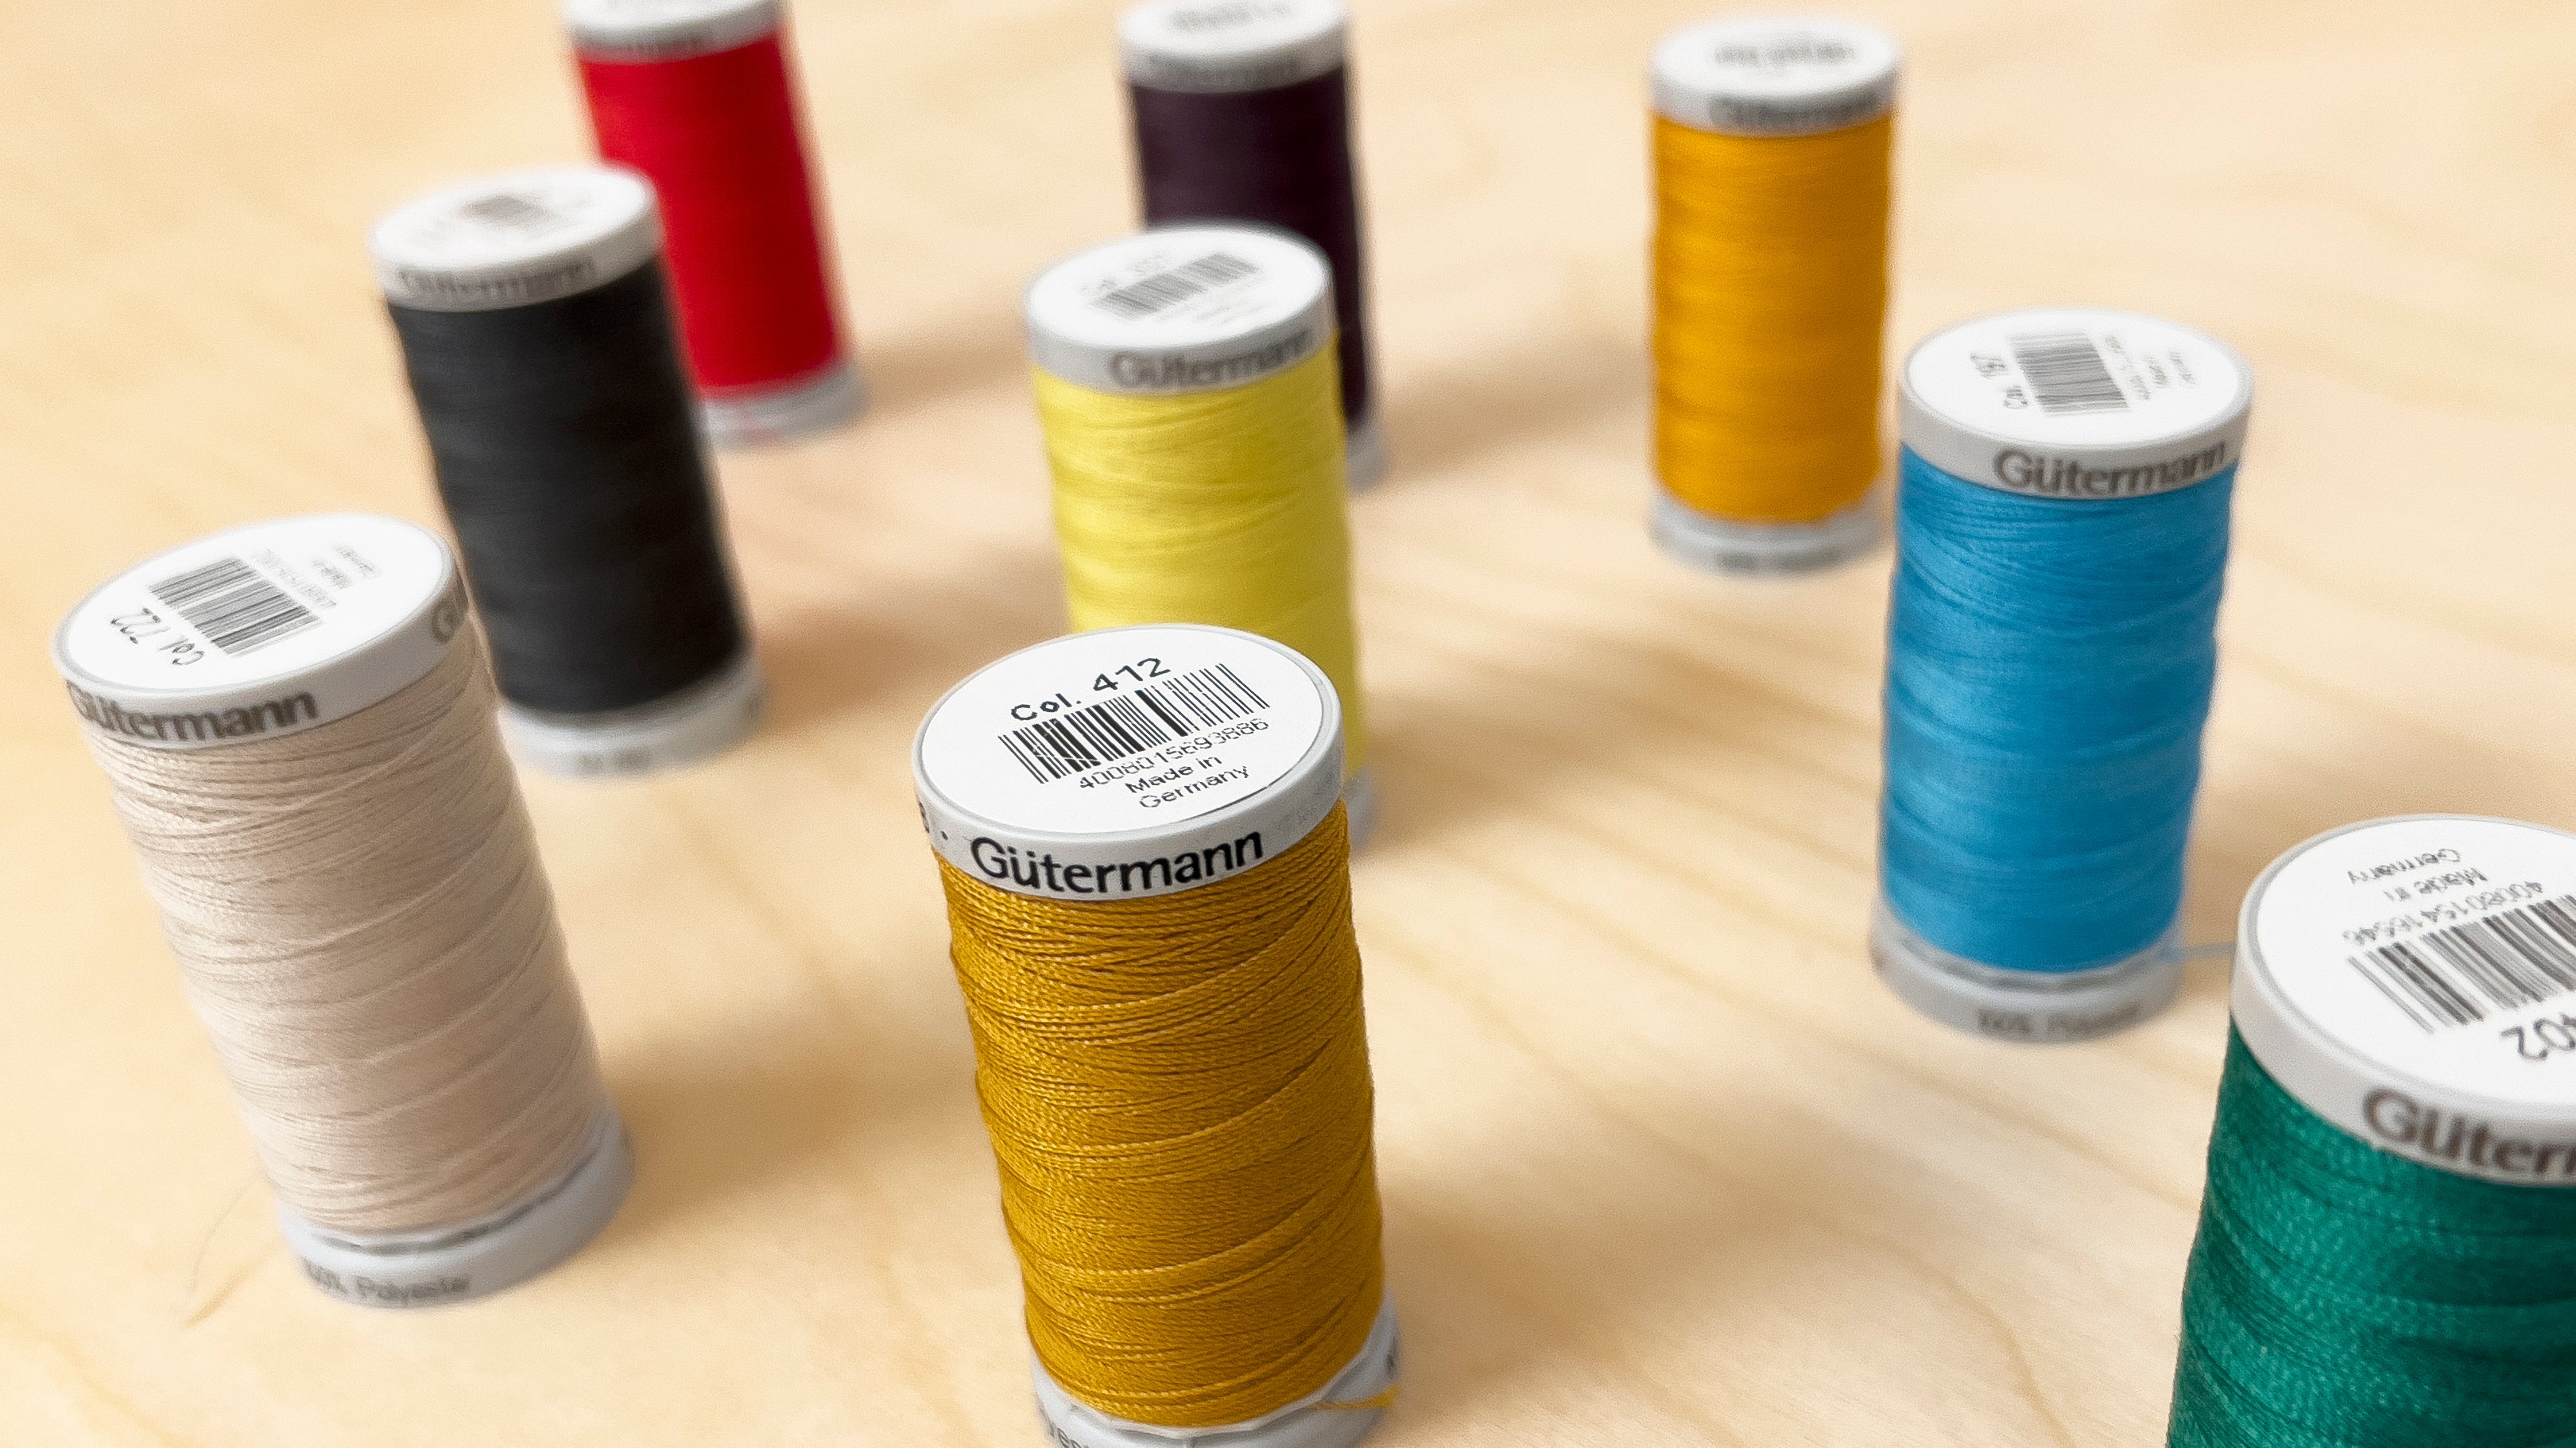 Gutermann Extra-Strong Thread, 5.5 x 2.7 x 2.7 cm, Vellum 0169